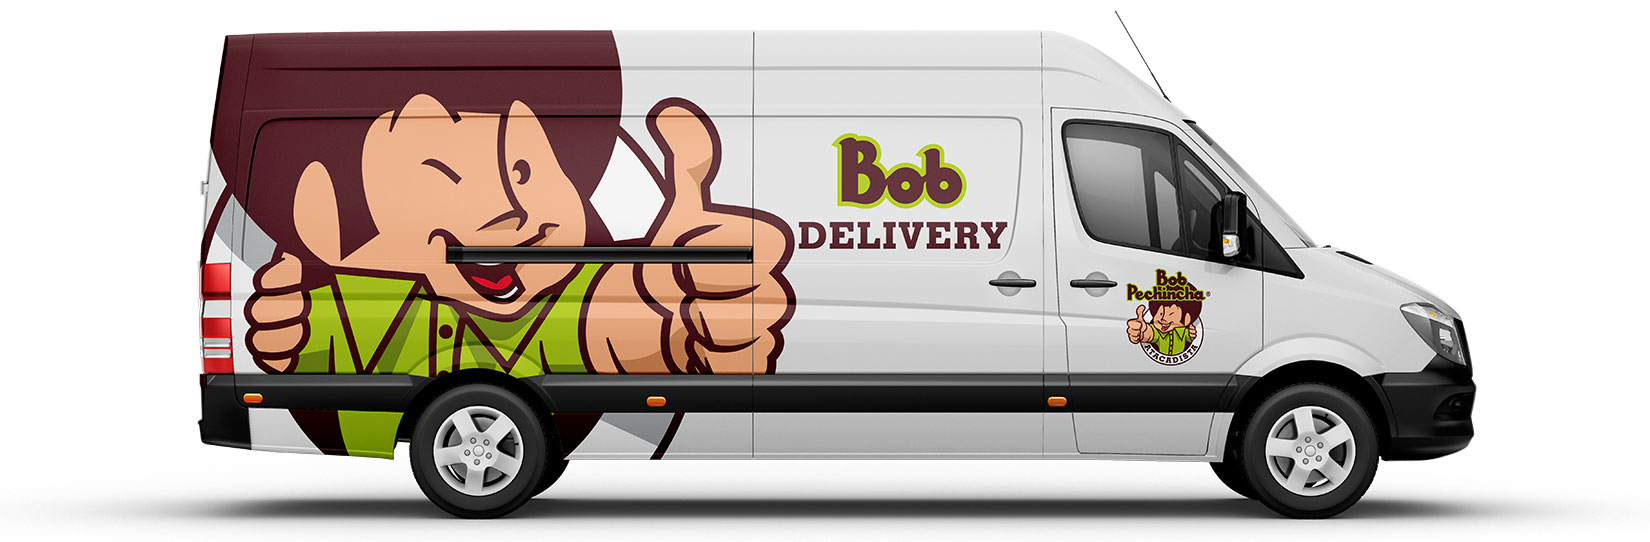 Van Bob Pechincha Delivery